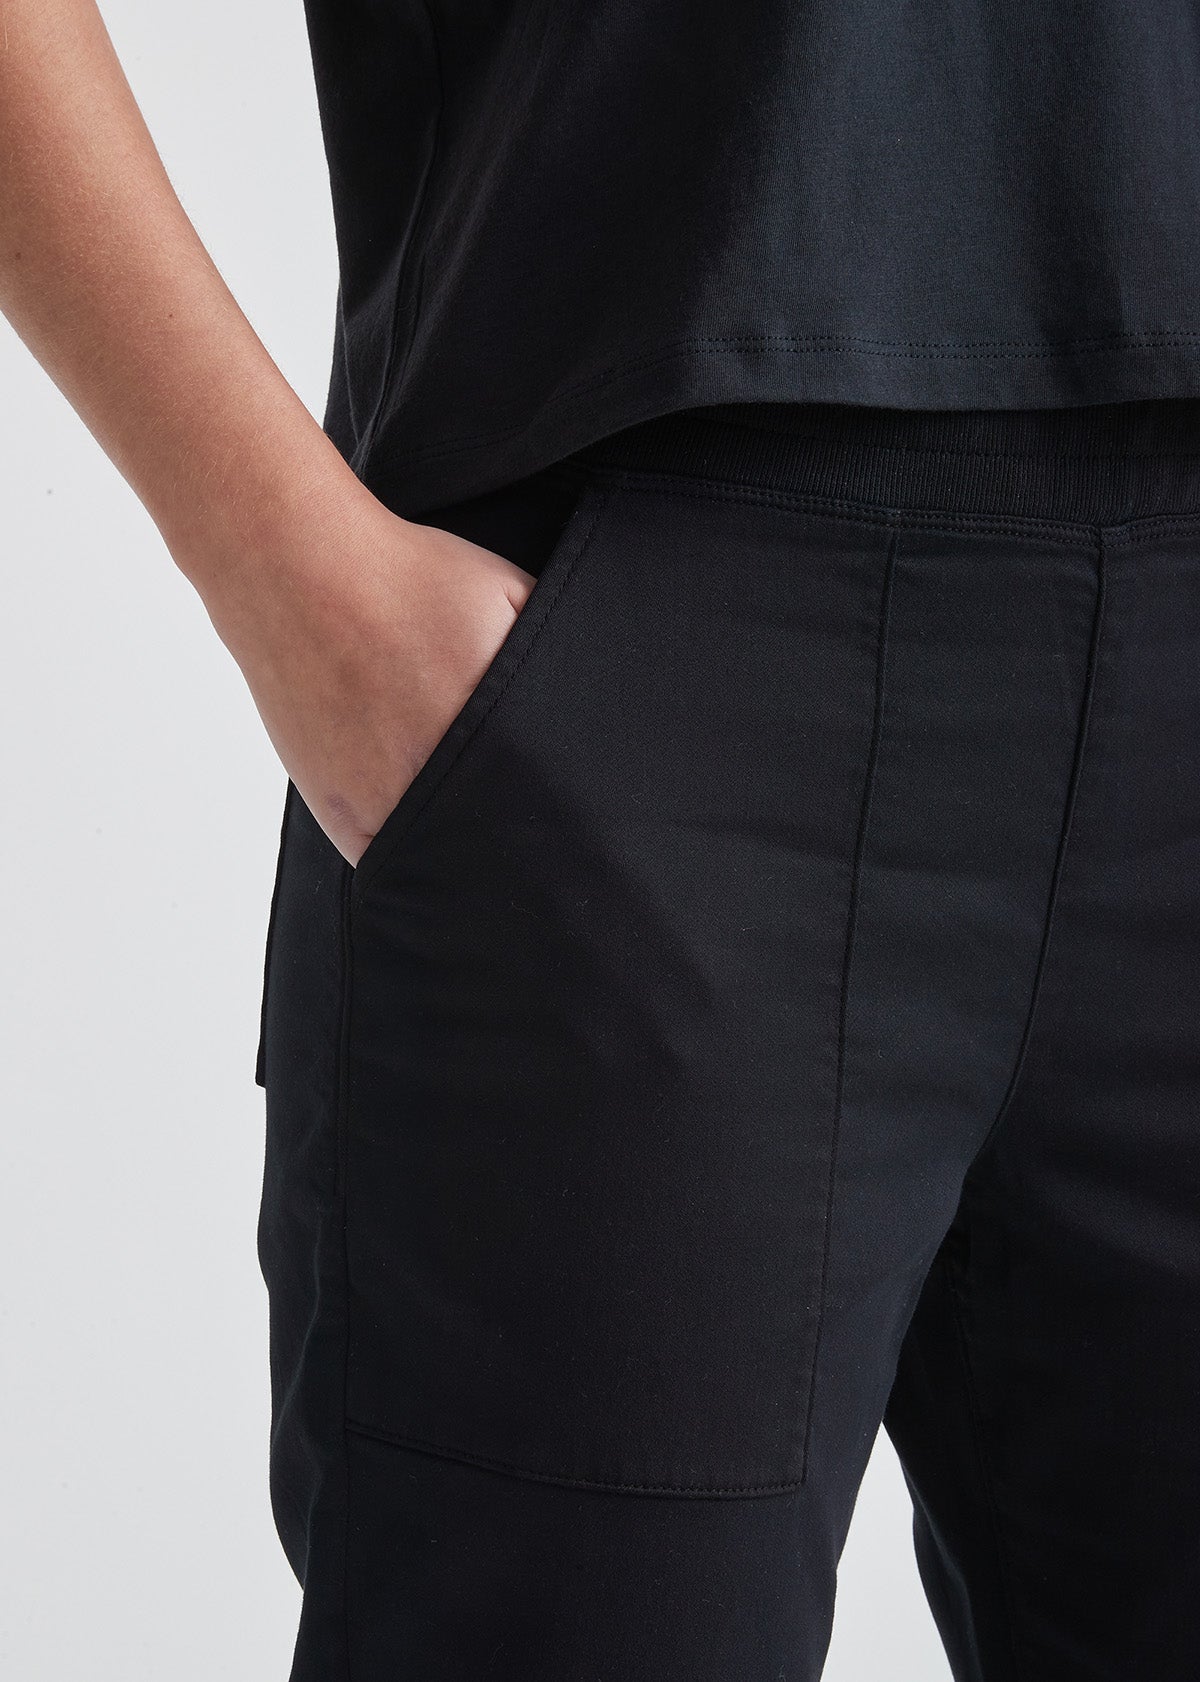 Women's Black Crop Sweatpant Pocket Detail